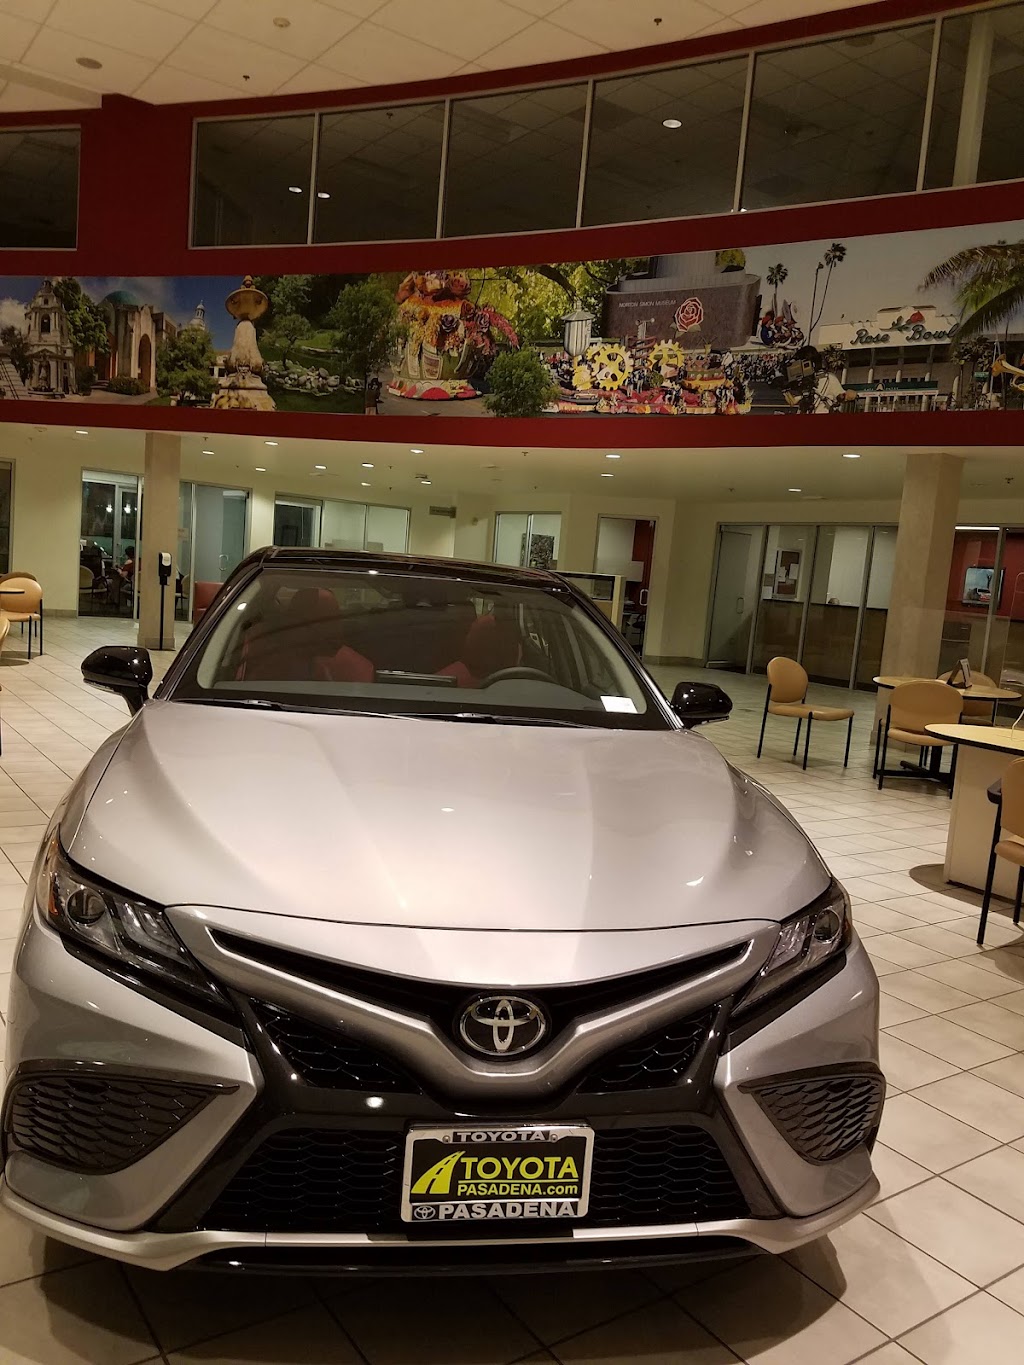 Toyota Pasadena | 3600 E Foothill Blvd, Pasadena, CA 91107, USA | Phone: (626) 795-9787